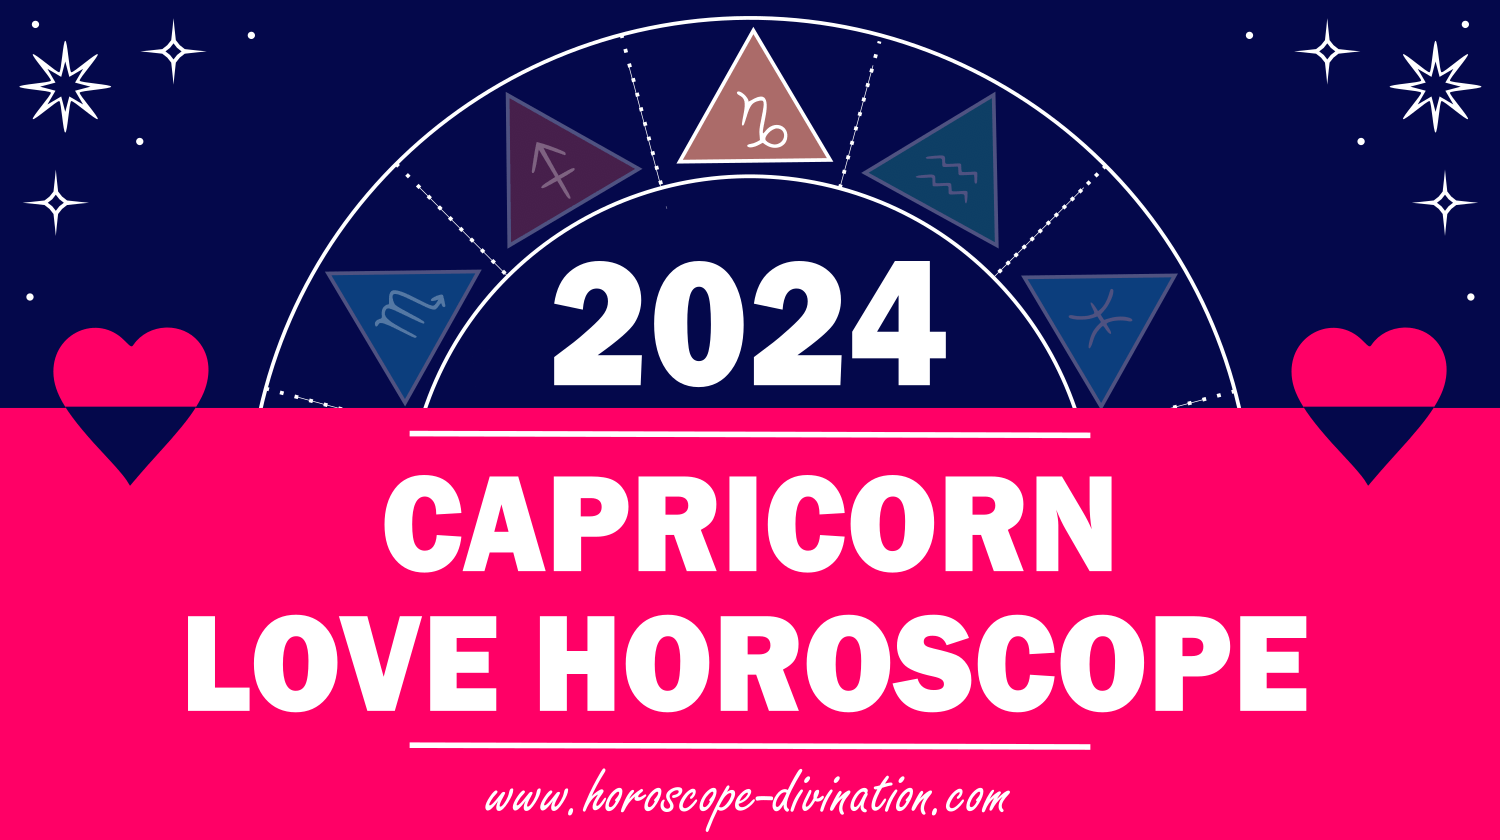 Capricorn Love Horoscope 2024 Love & Relationships prediction